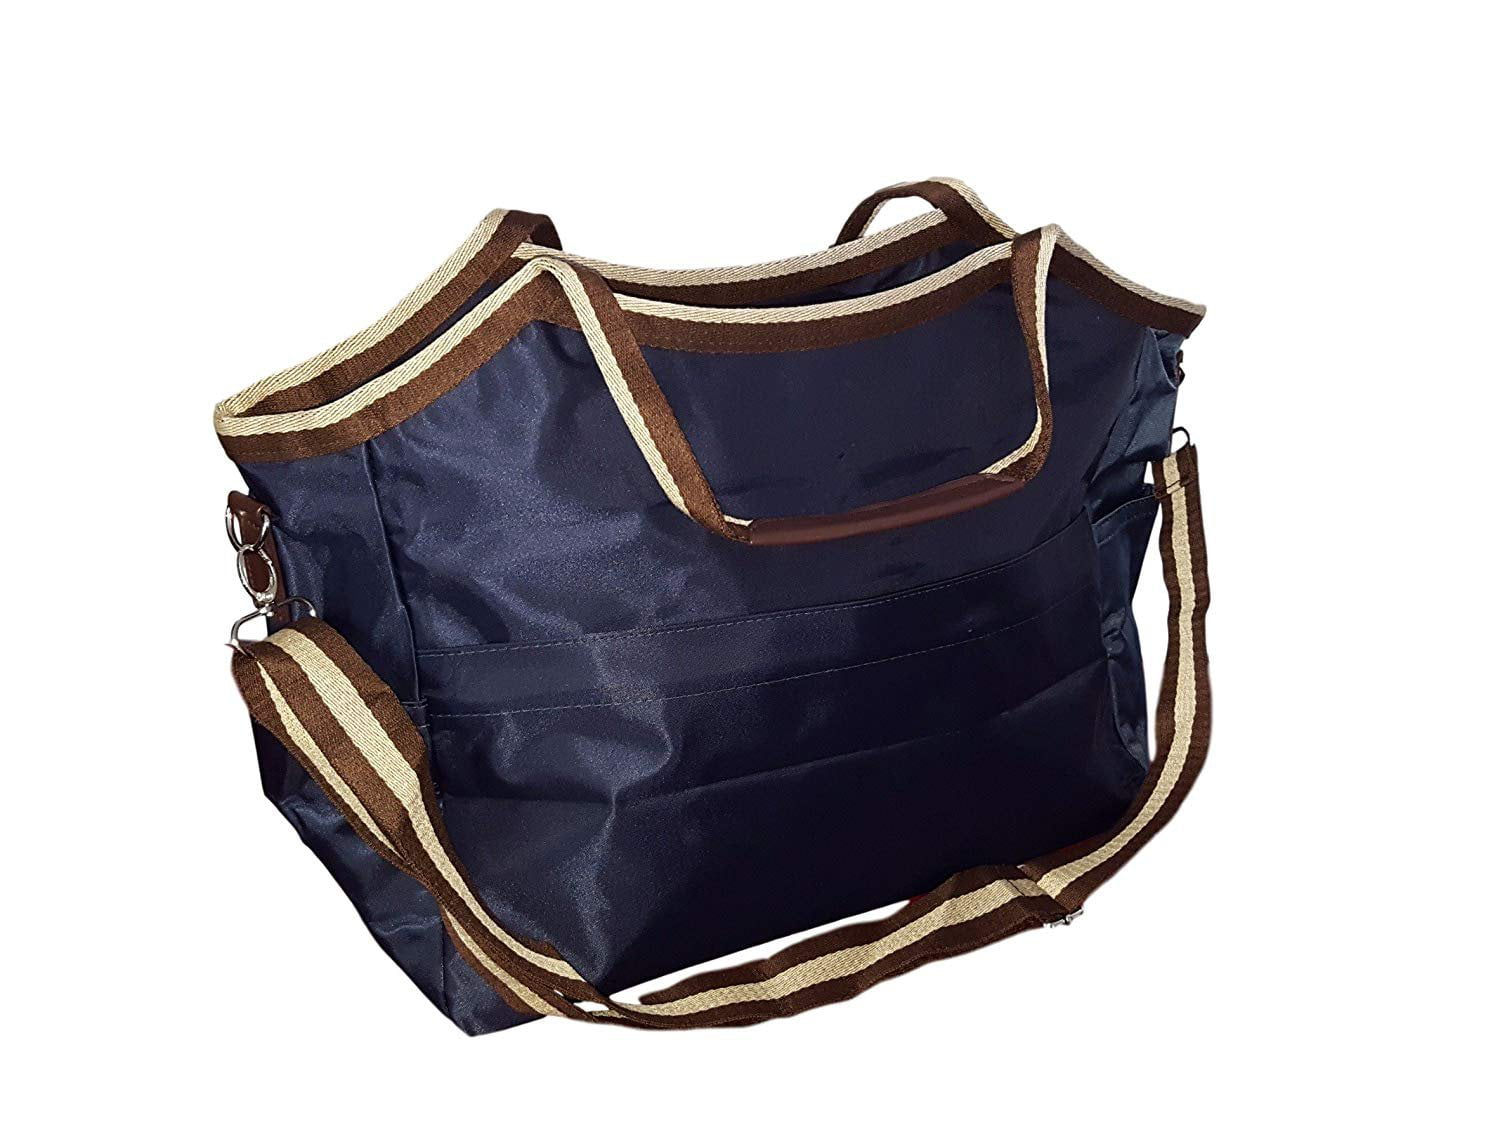 20 inch Deluxe Overnight Duffle Bag (Navy) - 0 - 0